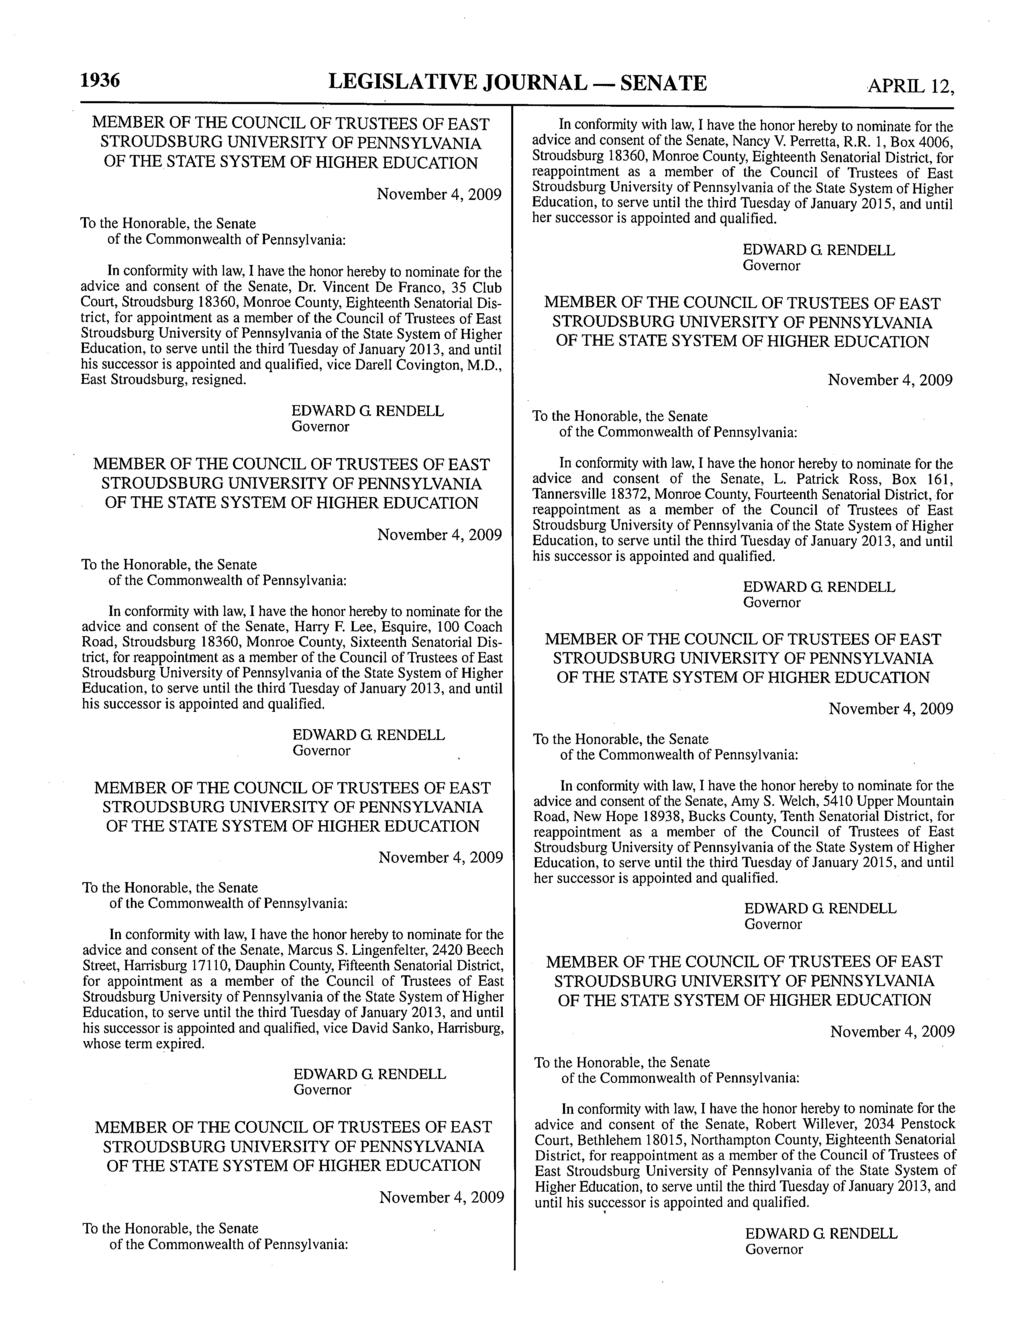 1936 LEGISLATIVE JOURNAL - SENATE APRIL 12, advice and consent of the Senate, Dr.